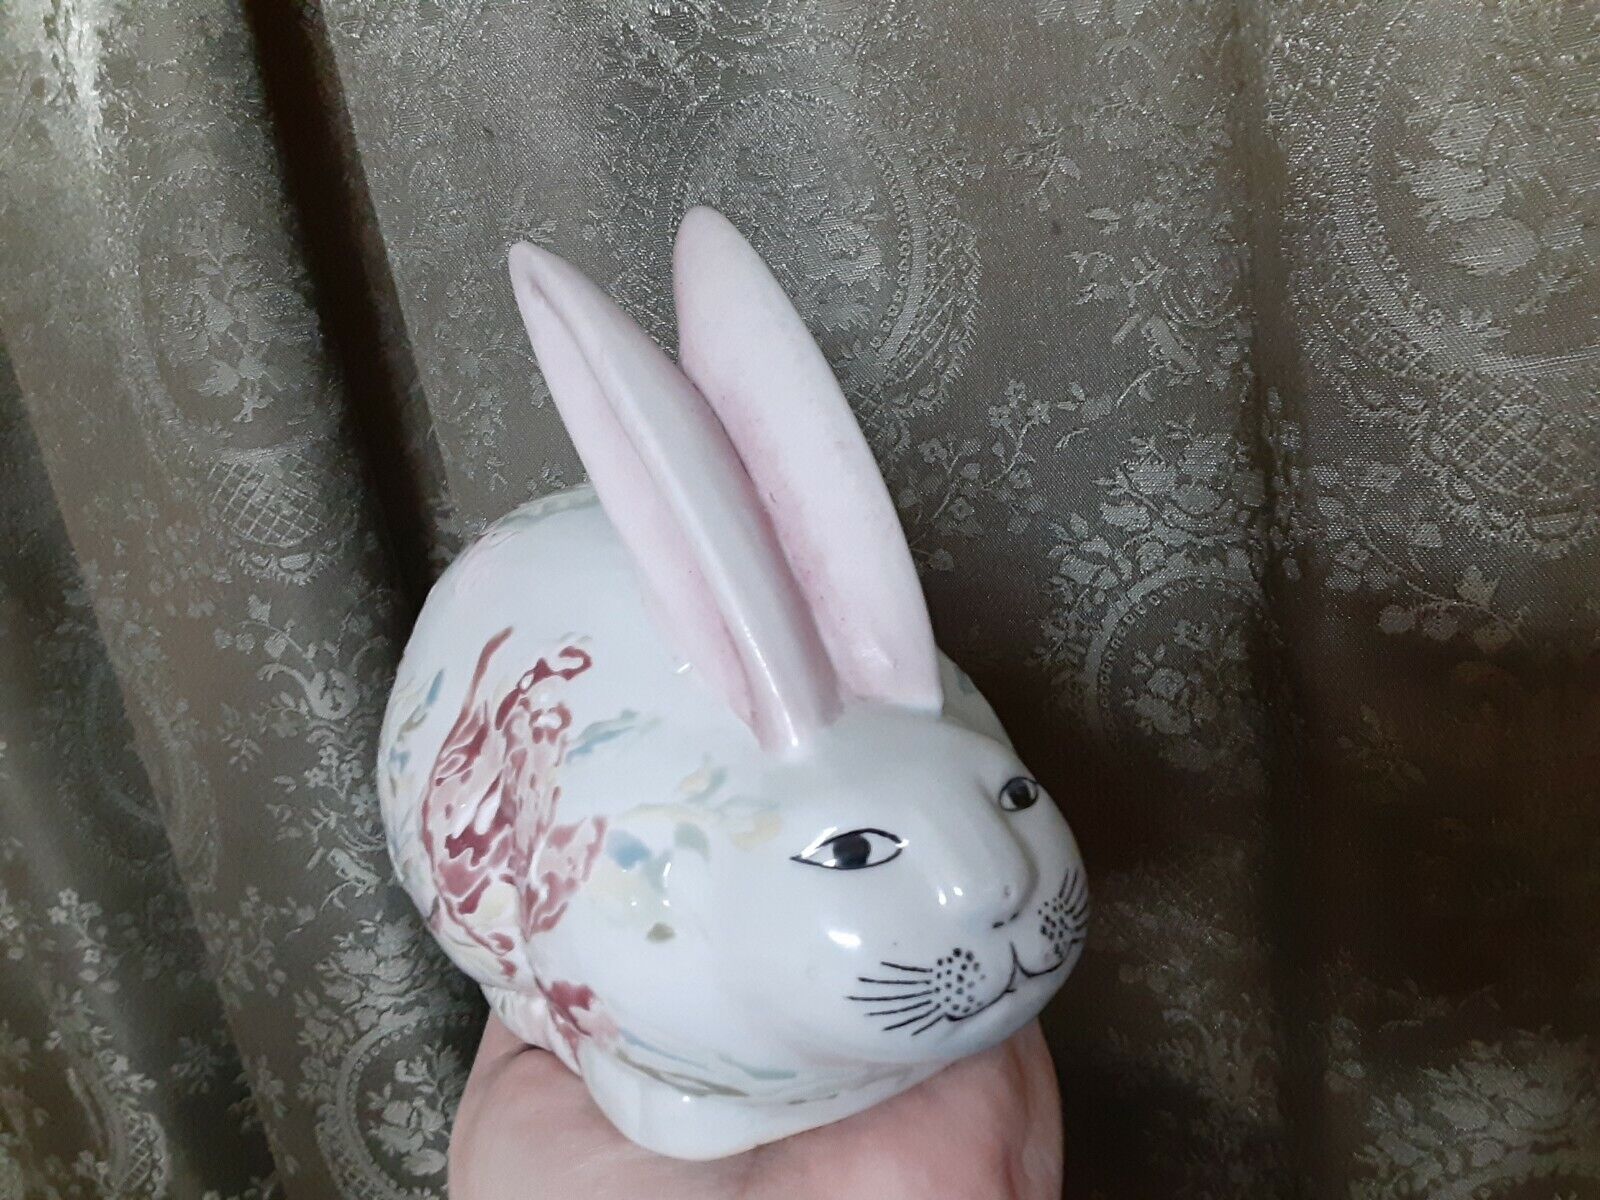 Rabbit Bunny Floral Figurine Bombay Company Rare Human Like Face Surreal Art 